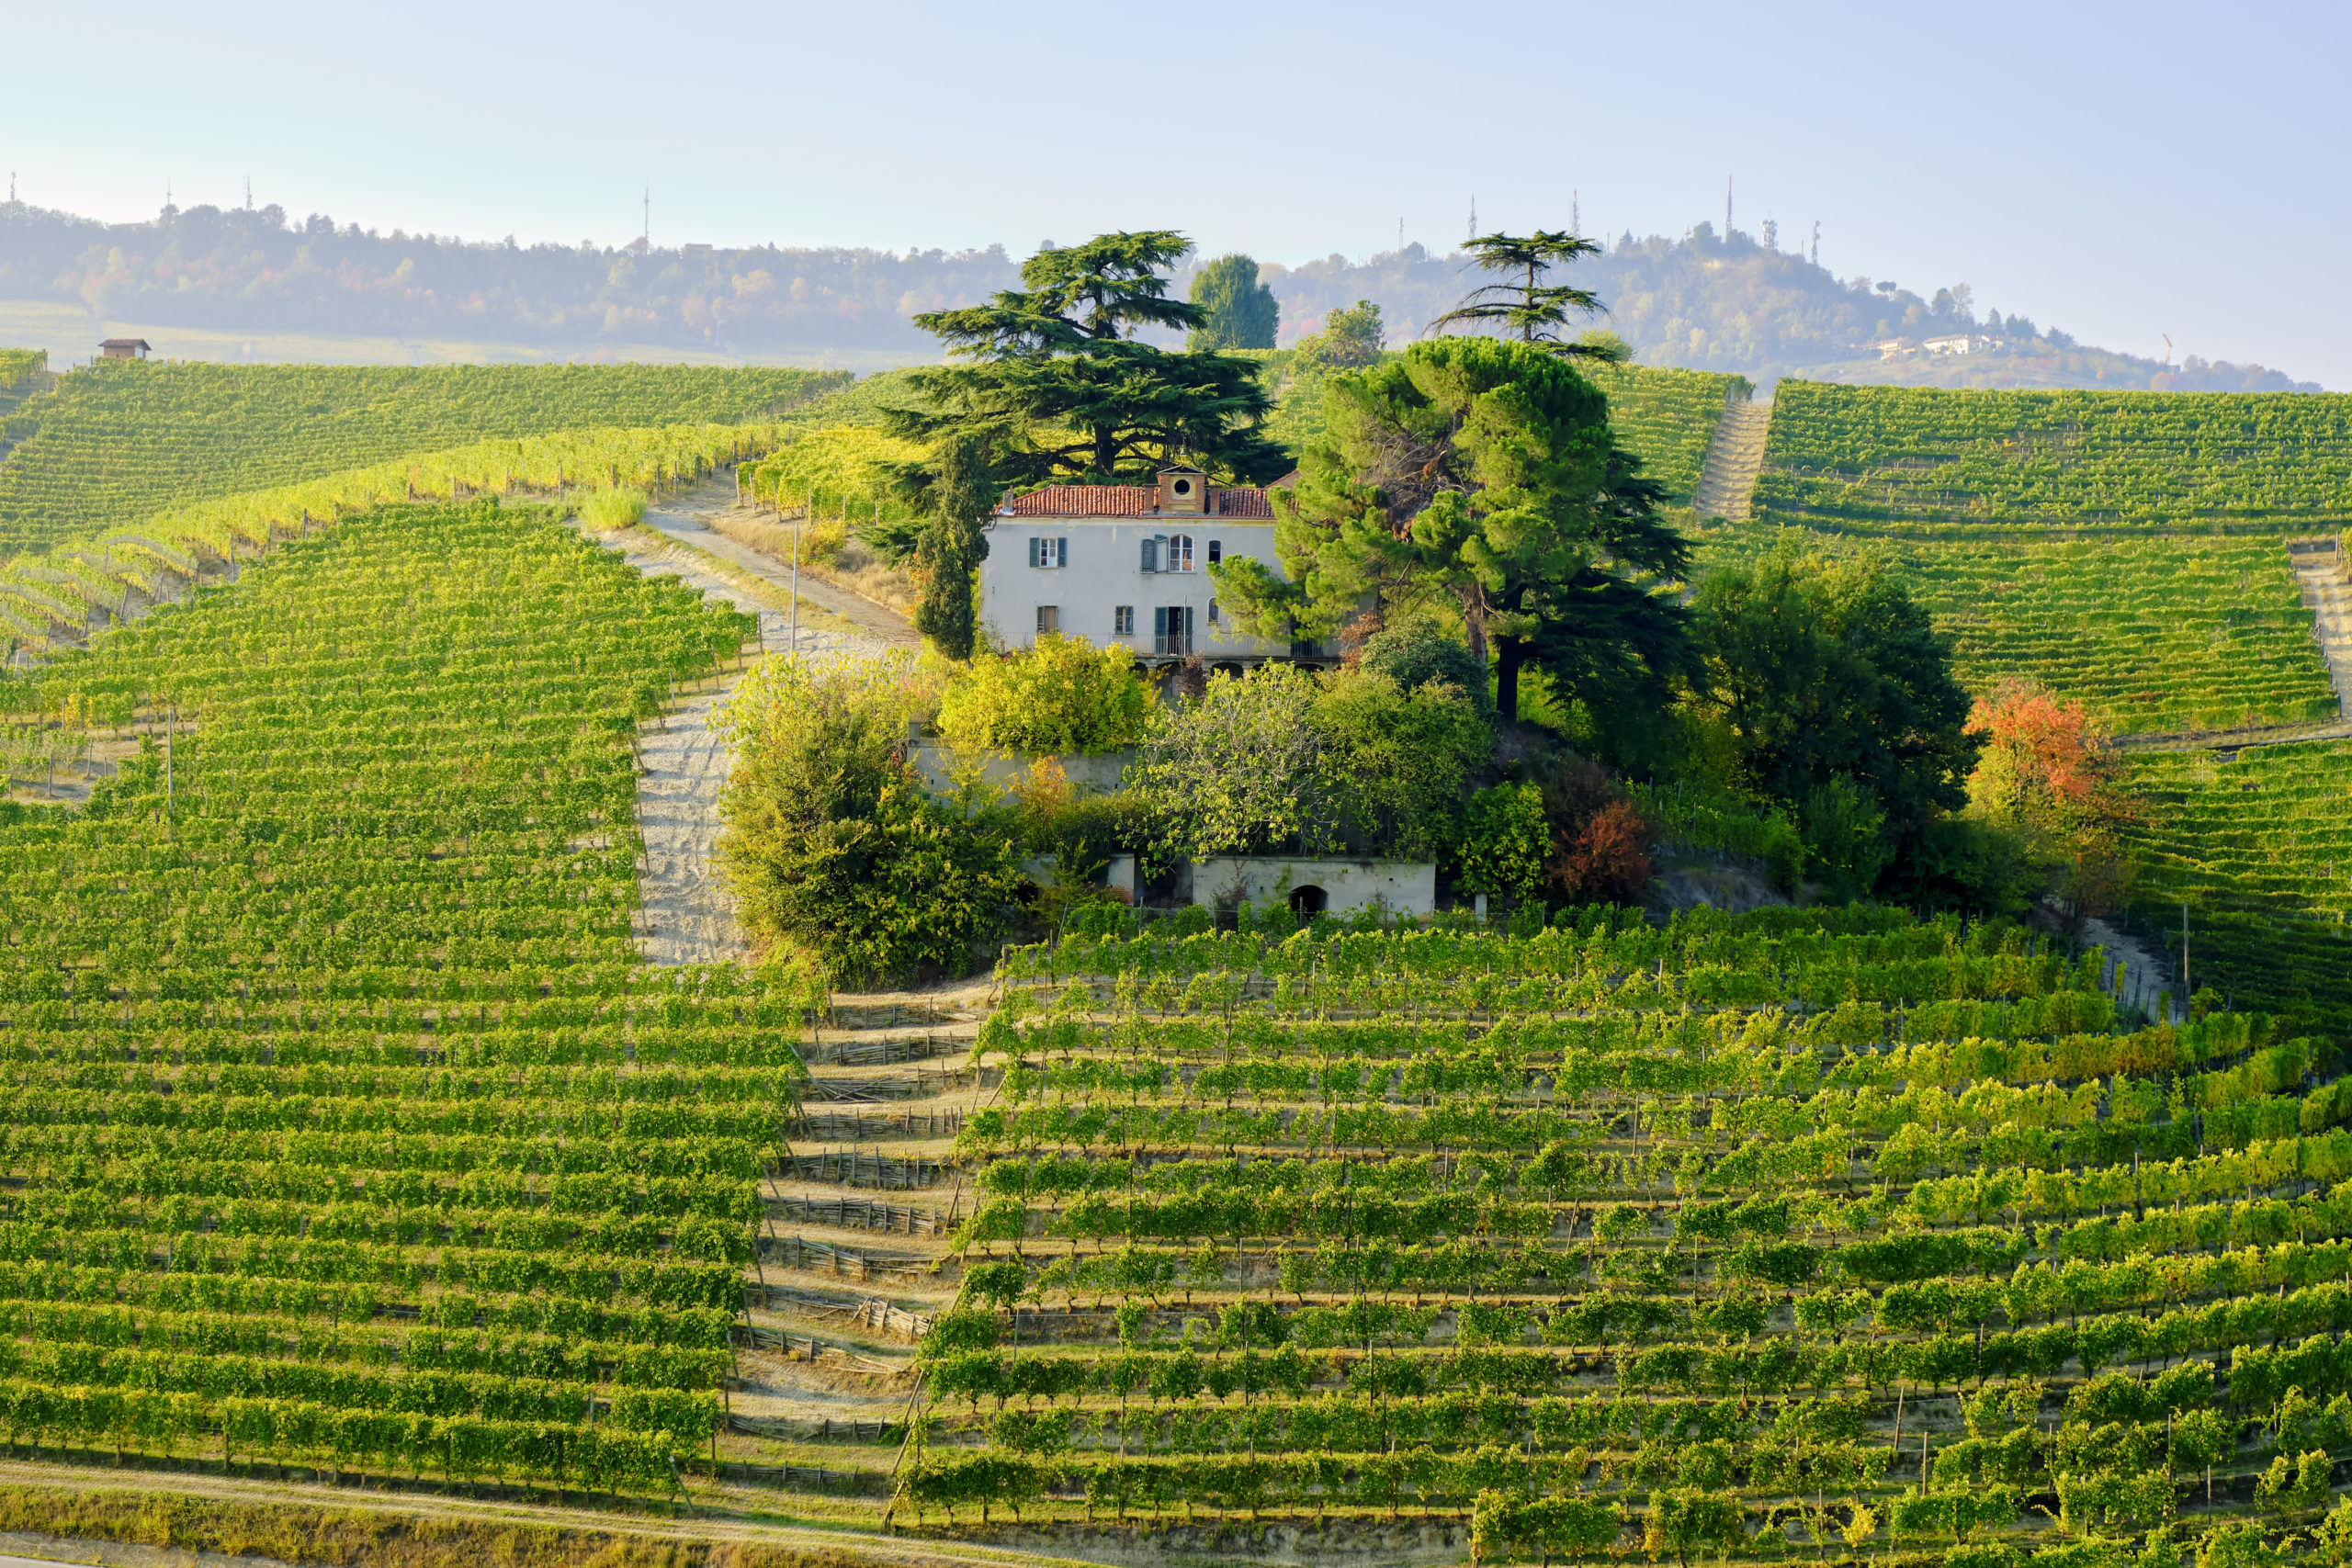 vecteezy_barolo-italy-2021-farm-surrounded-by-vineyards_4439729